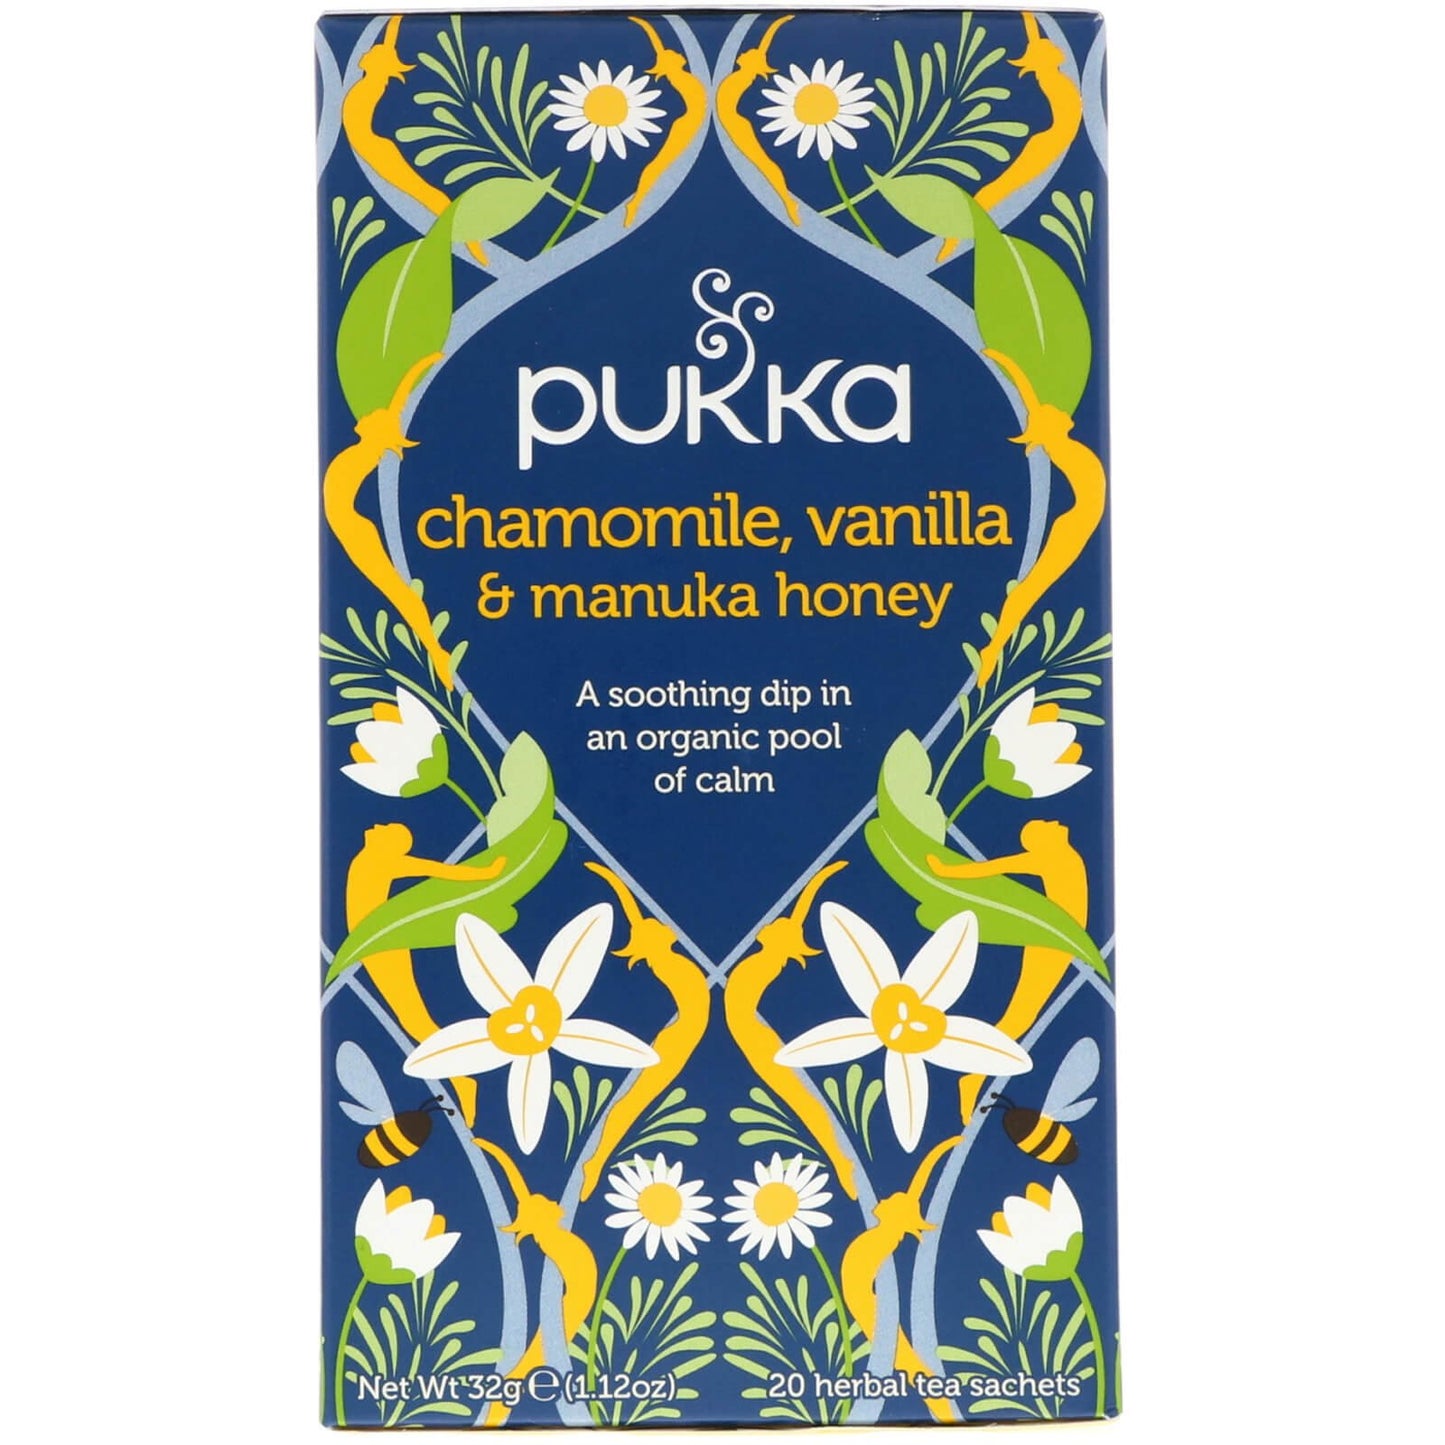 Pukka Organic Chamomile Vanilla Manuka Honey 20 bag